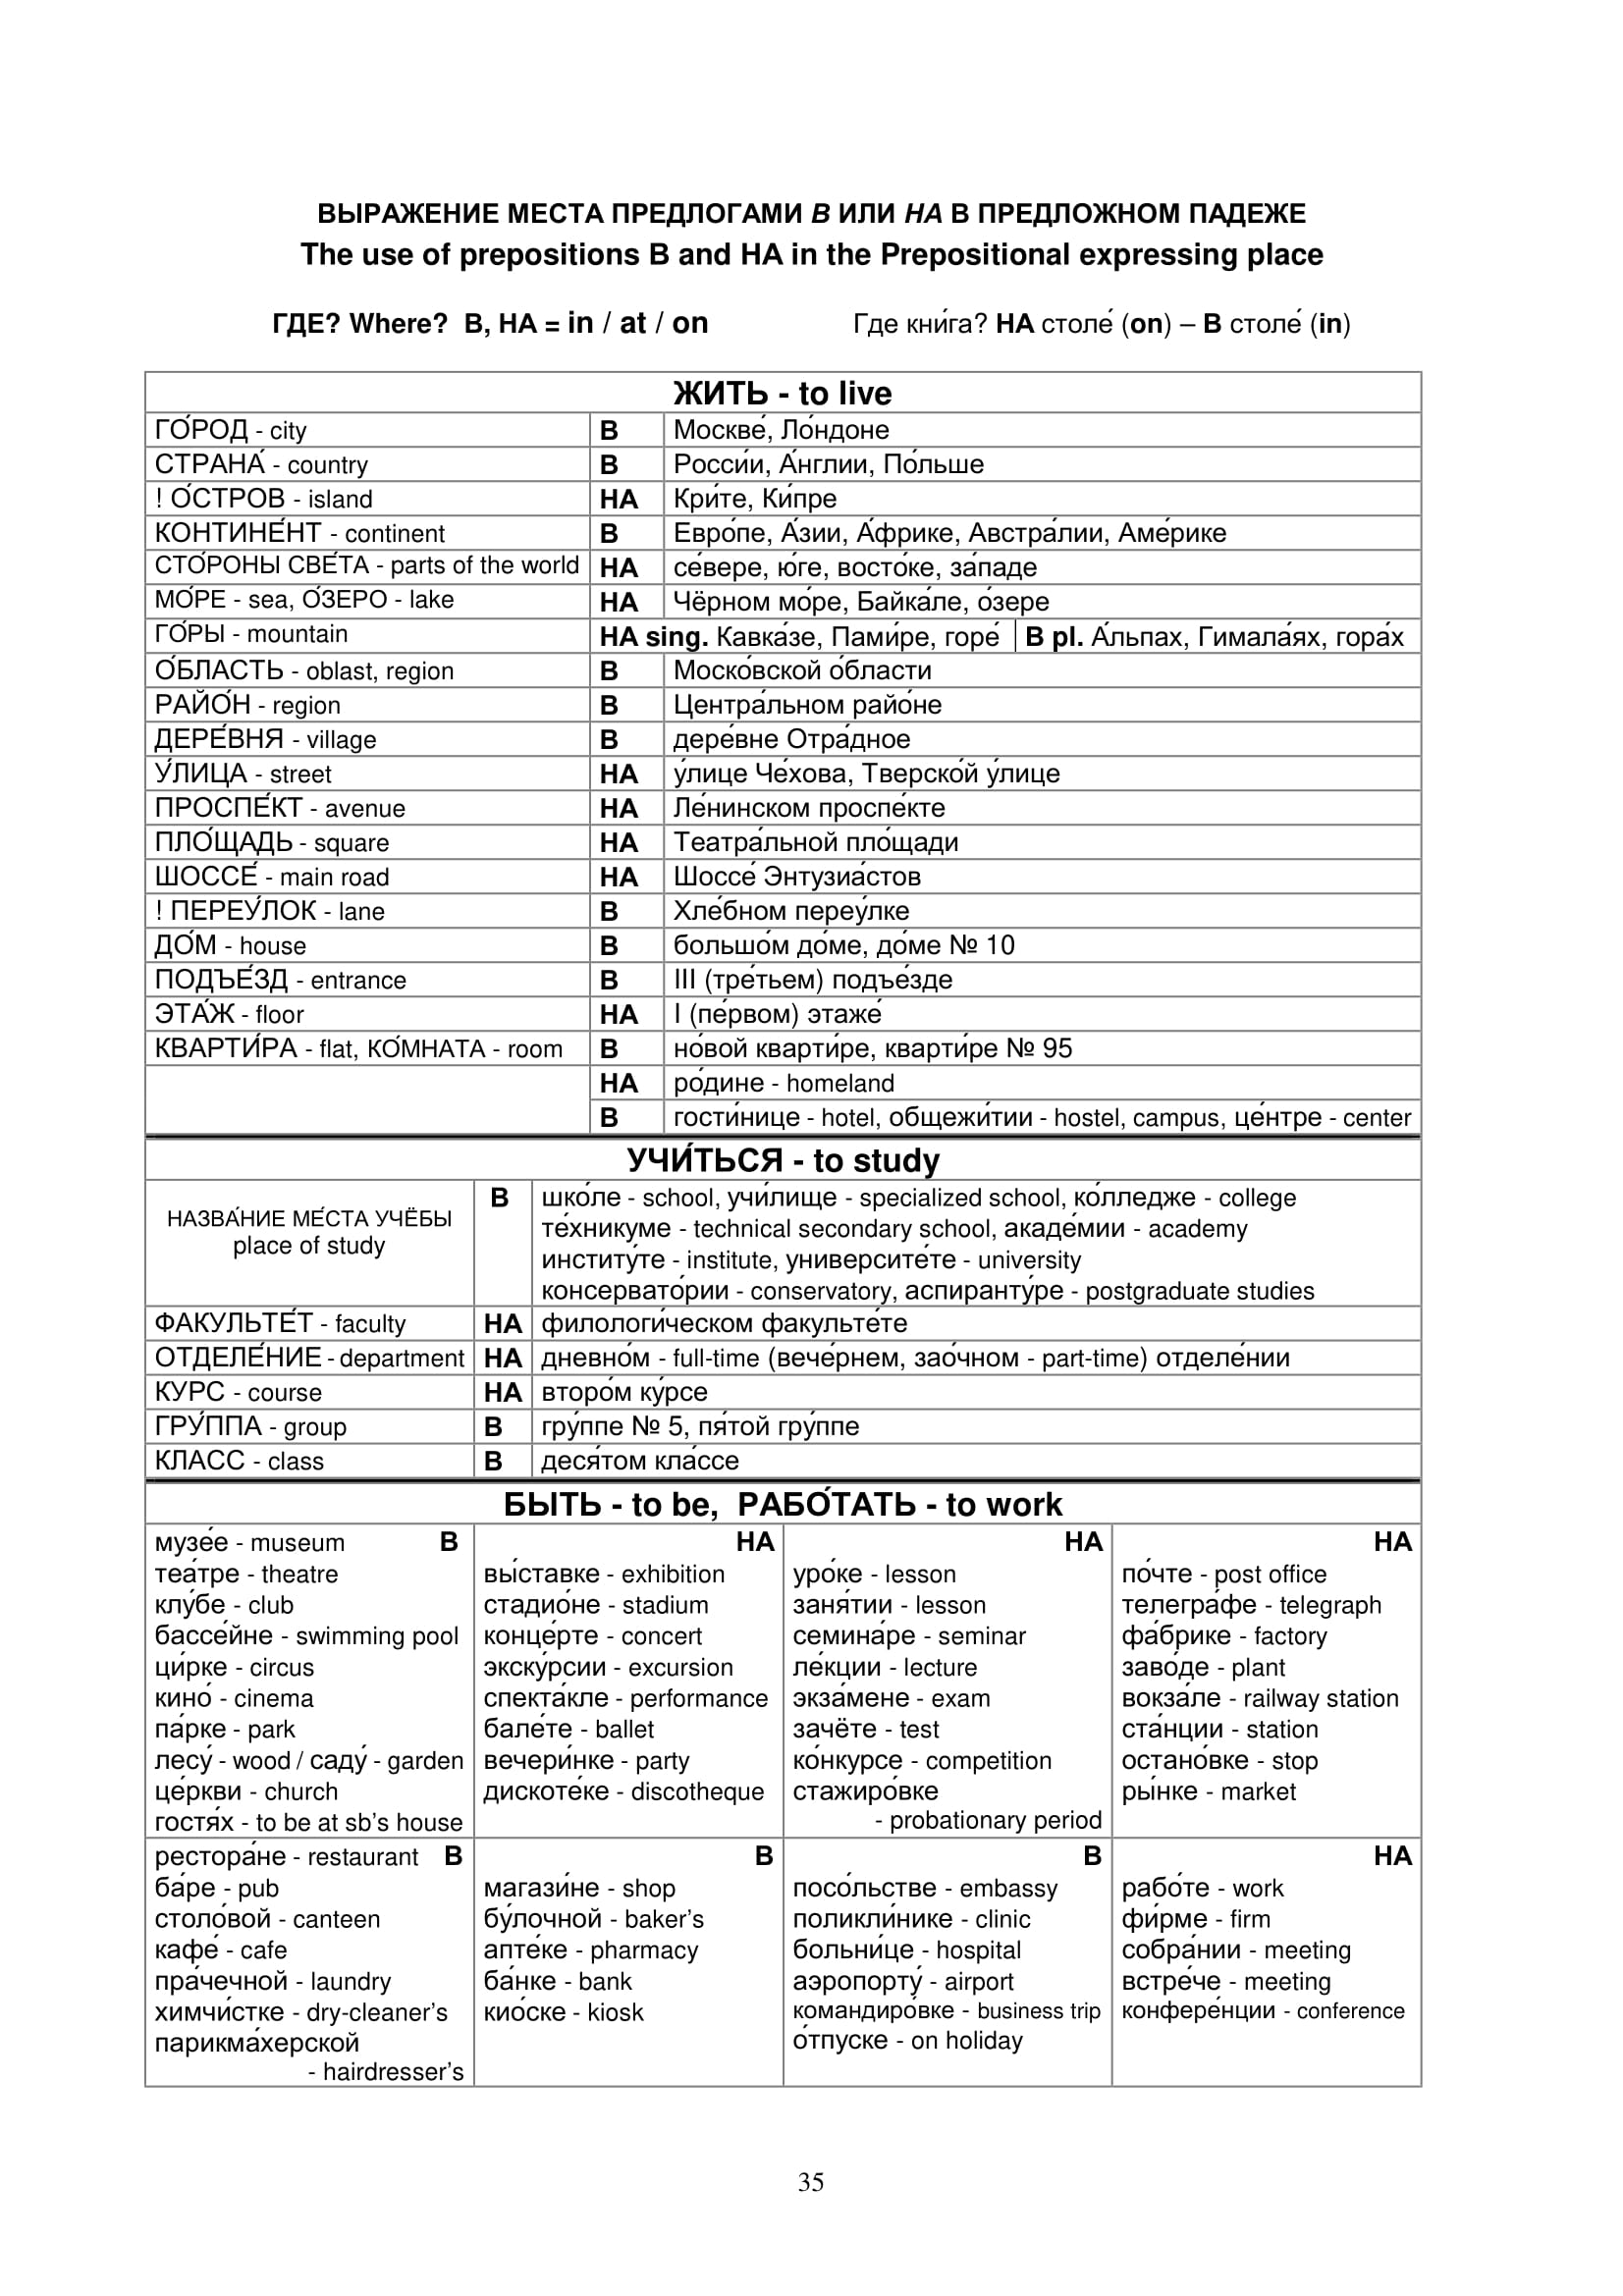 N.V. Kuzmina Russian Grammar in Tables Russkaya (BookZZ.org) NAKIMA book - muslim country-35-1.jpg